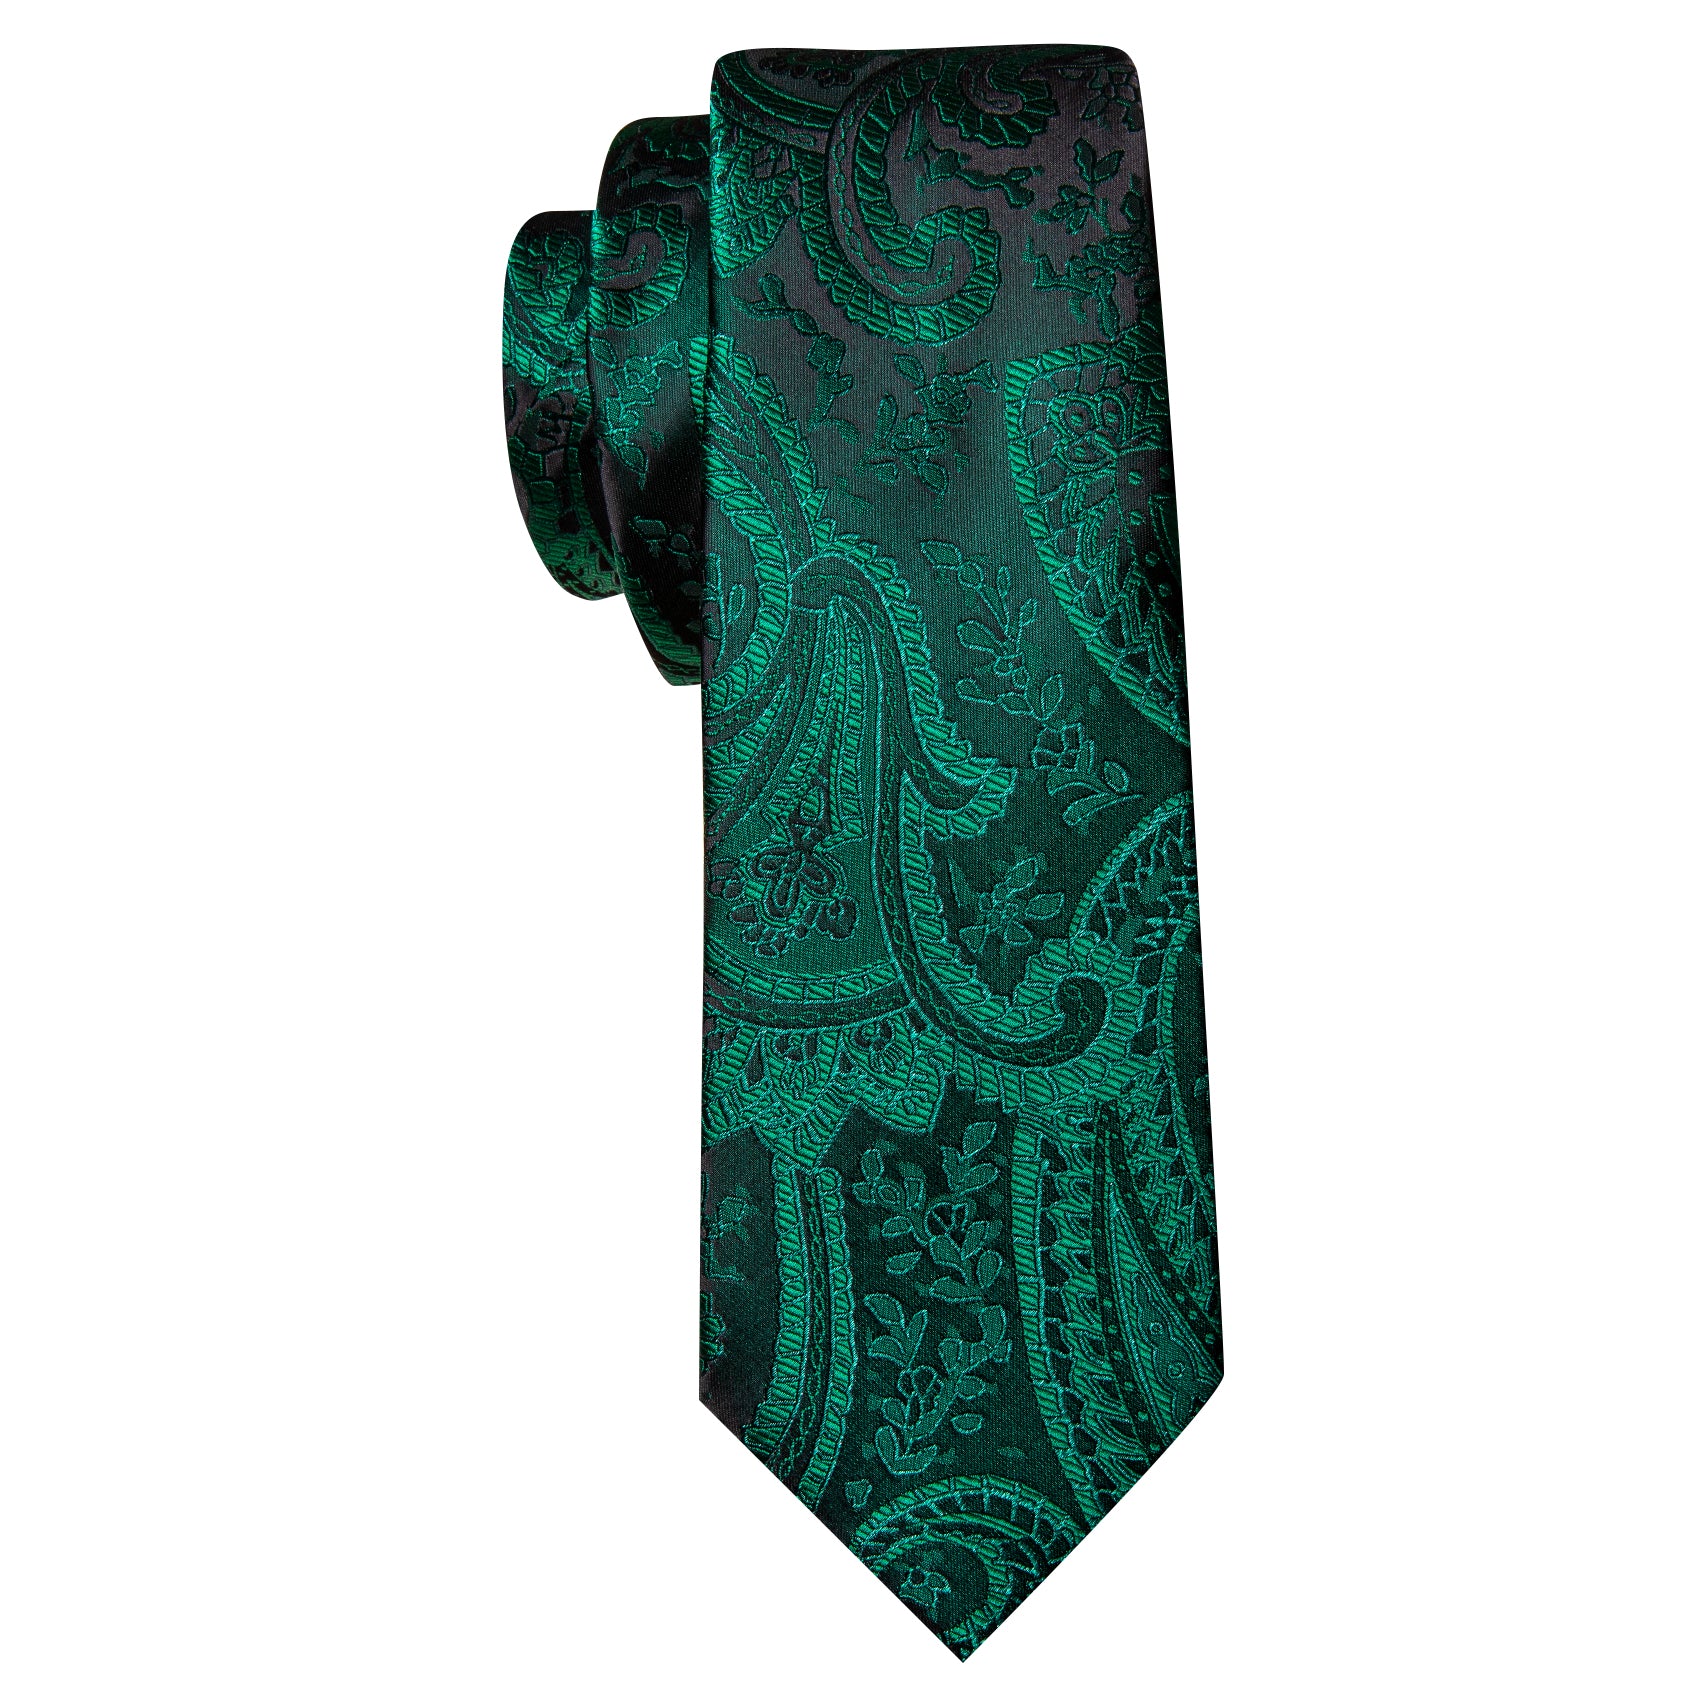 Hot Green Paisley Silk Tie Handkerchief Cufflinks Set